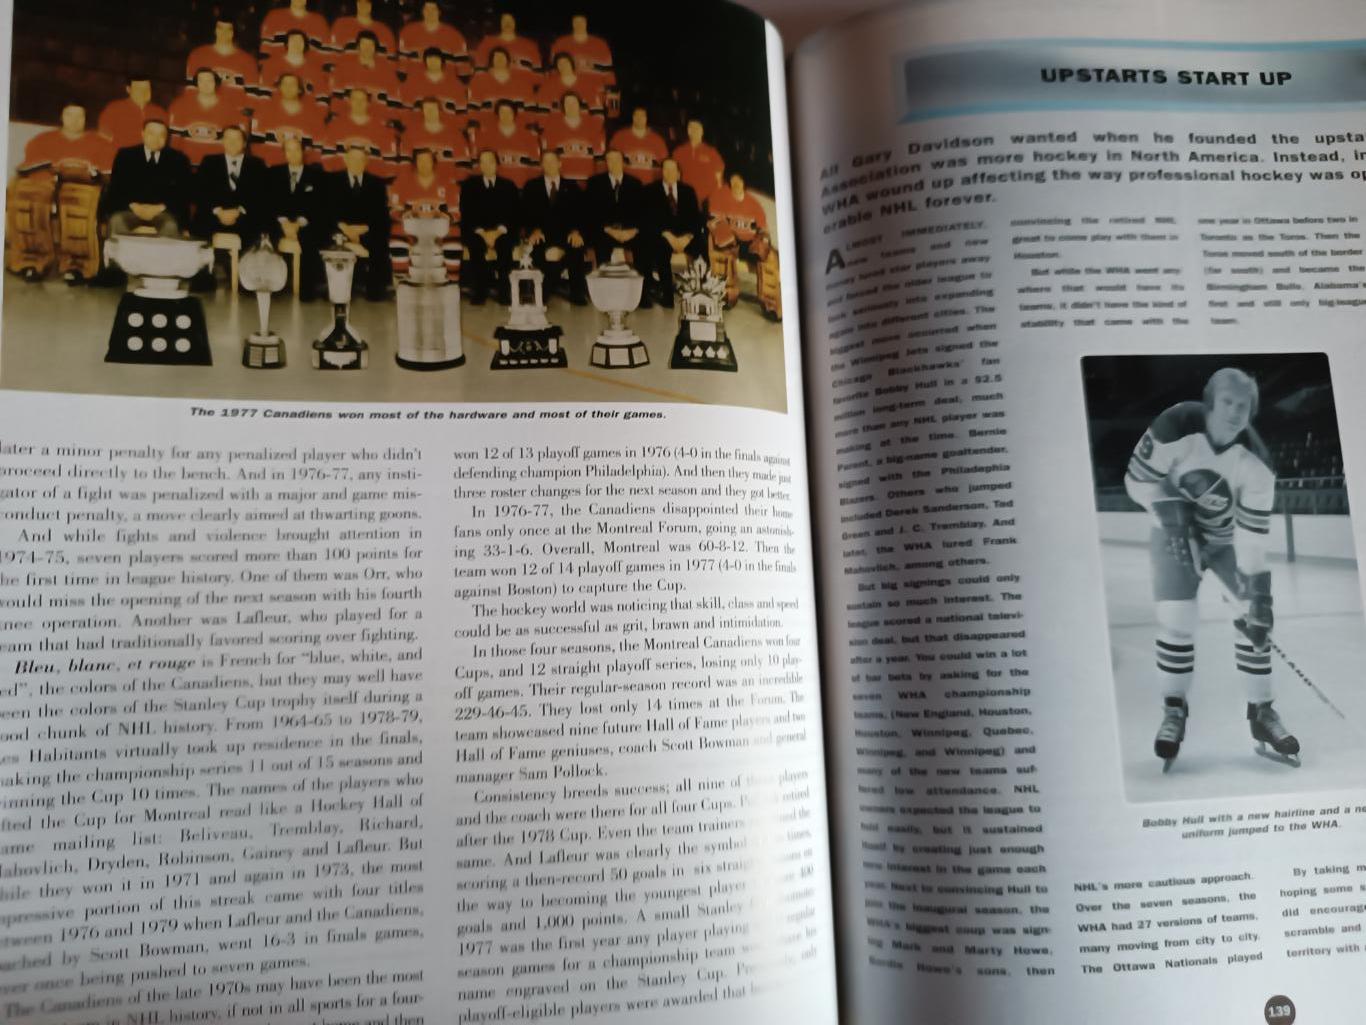 ХОККЕЙ КНИГА ИСТОРИЯ НХЛ 2000 THE OFFICIAL ILLUSTRATED NHL HISTORY BOOK 4